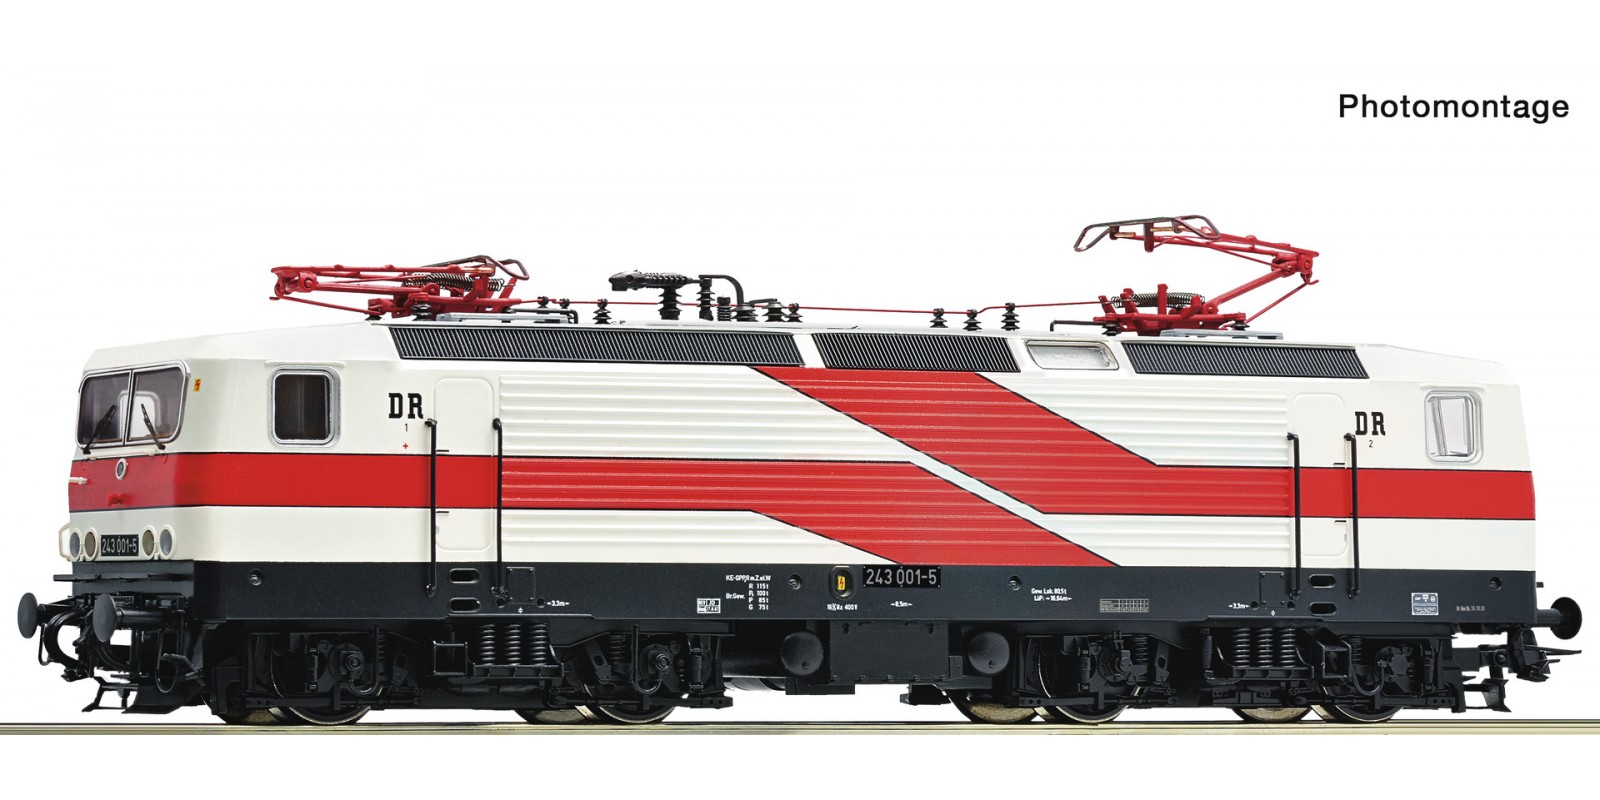 RO7500025 Electric locomotive 243 001-5, DR